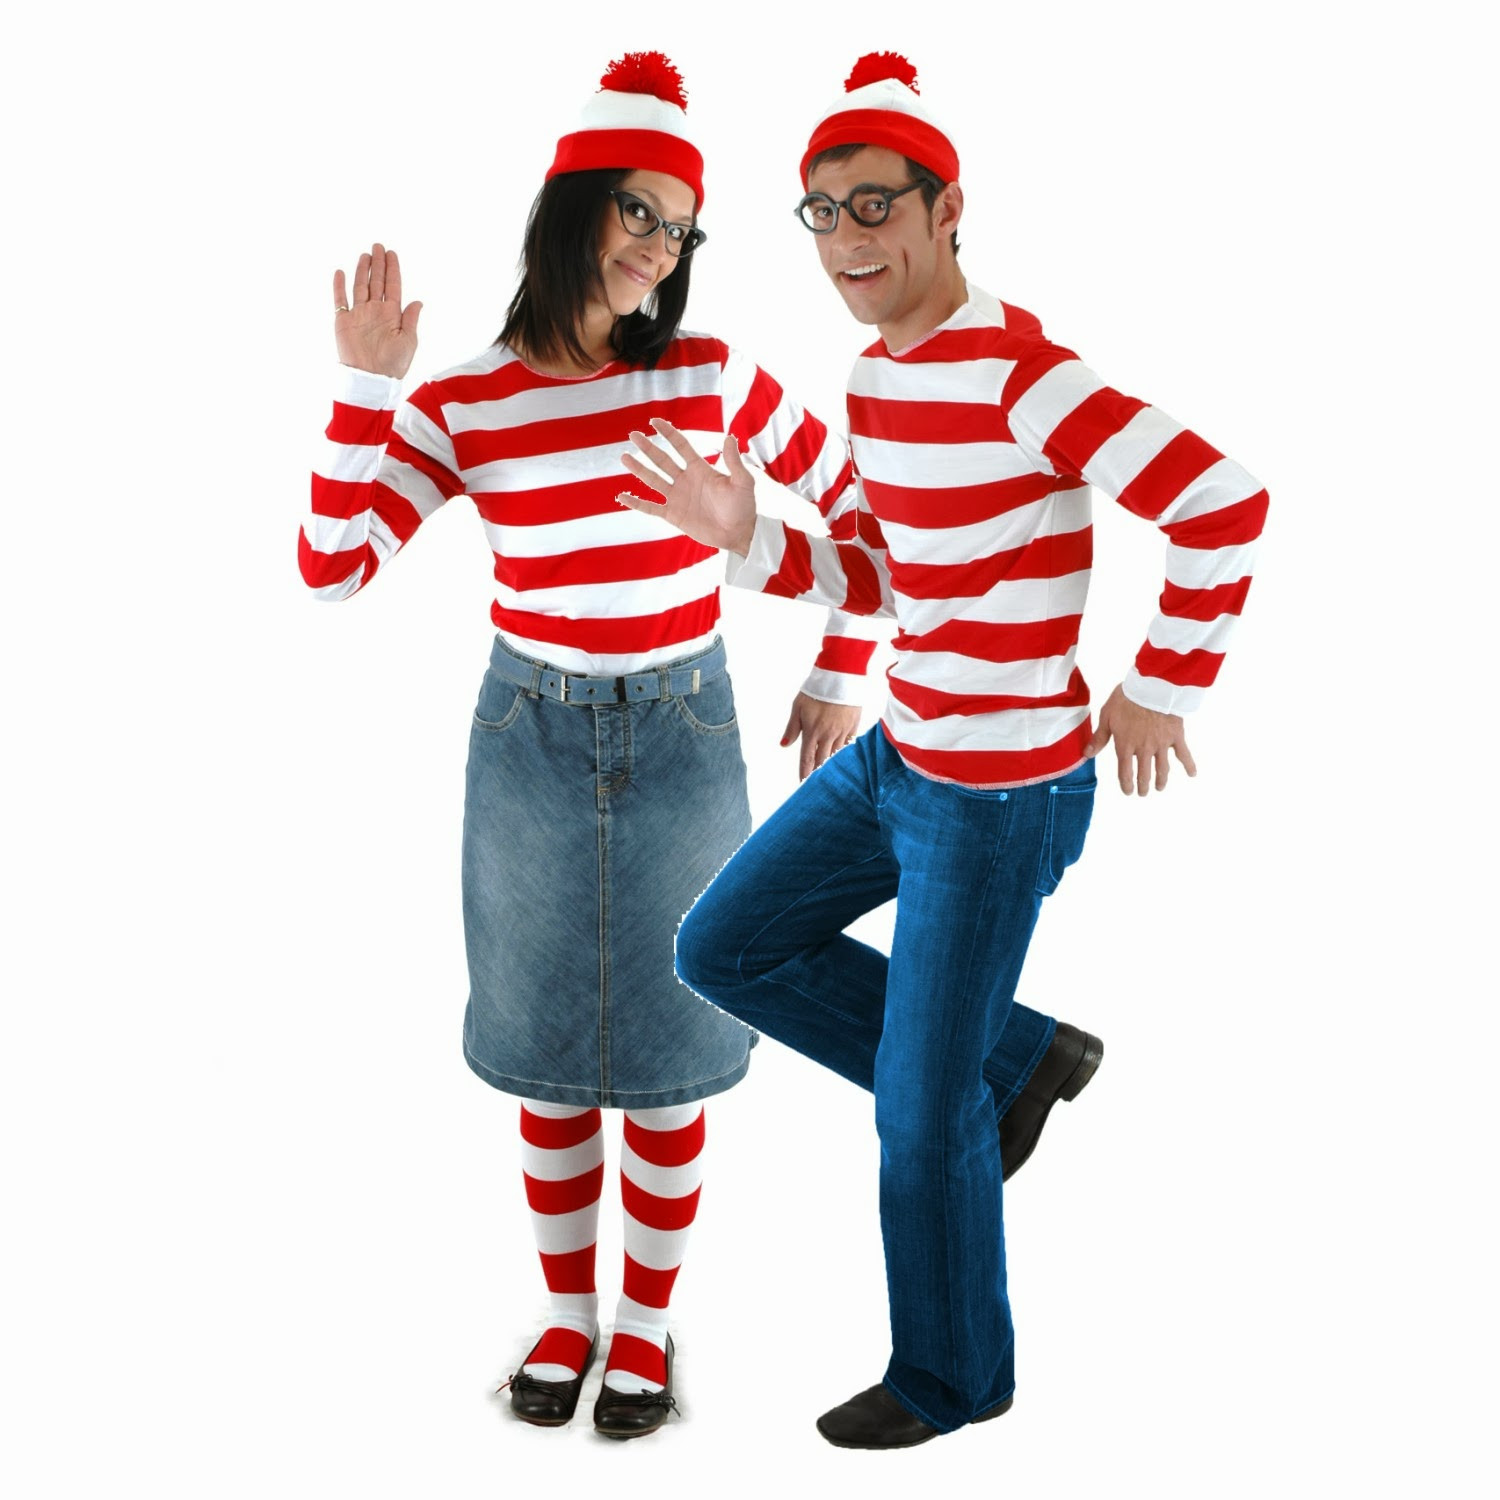 DIY Waldo Costume
 Daily Favor Identifying Waldo